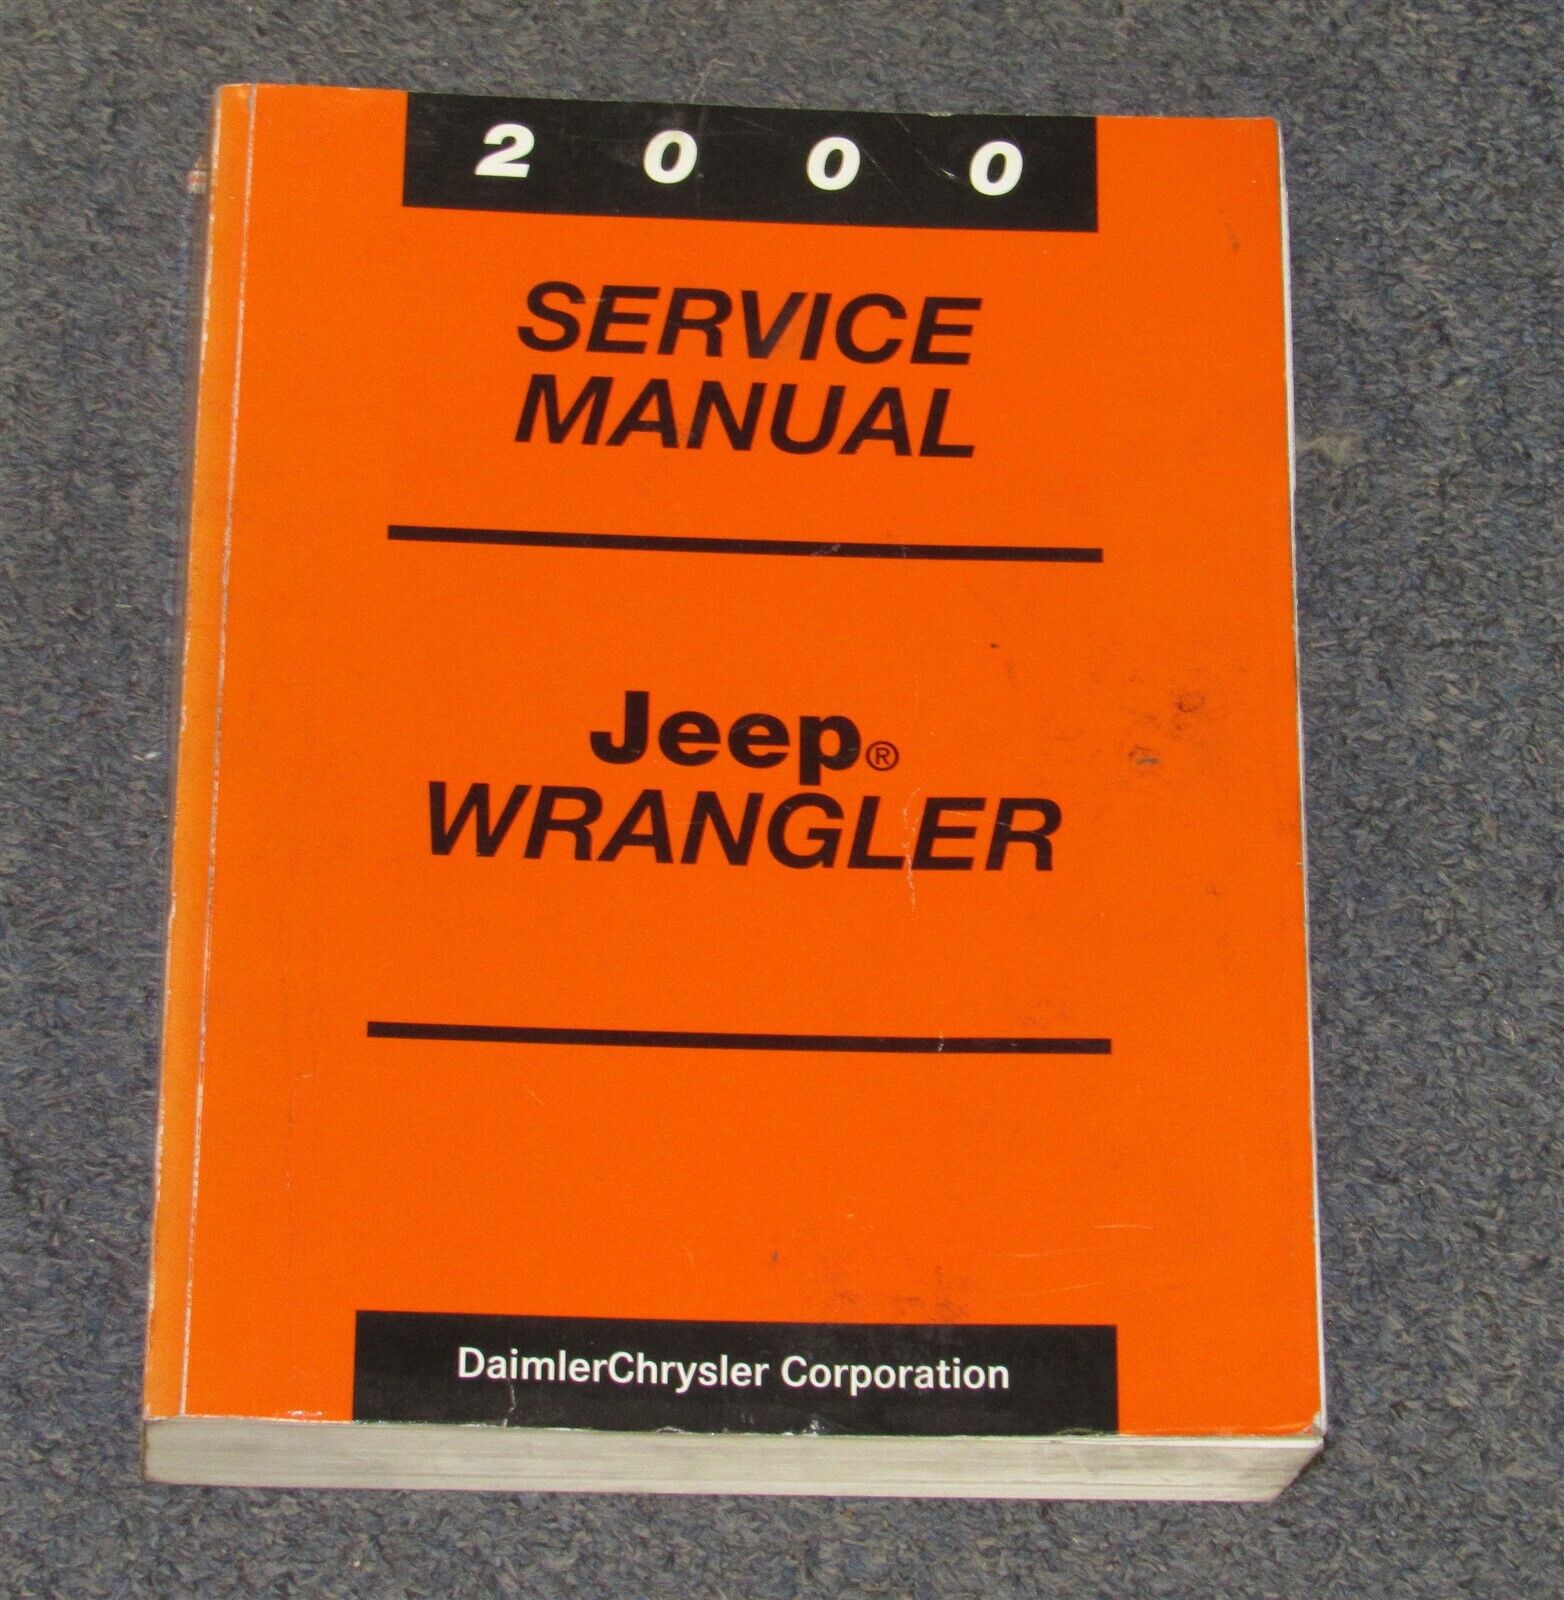 Total 102+ imagen 2000 jeep wrangler service manual